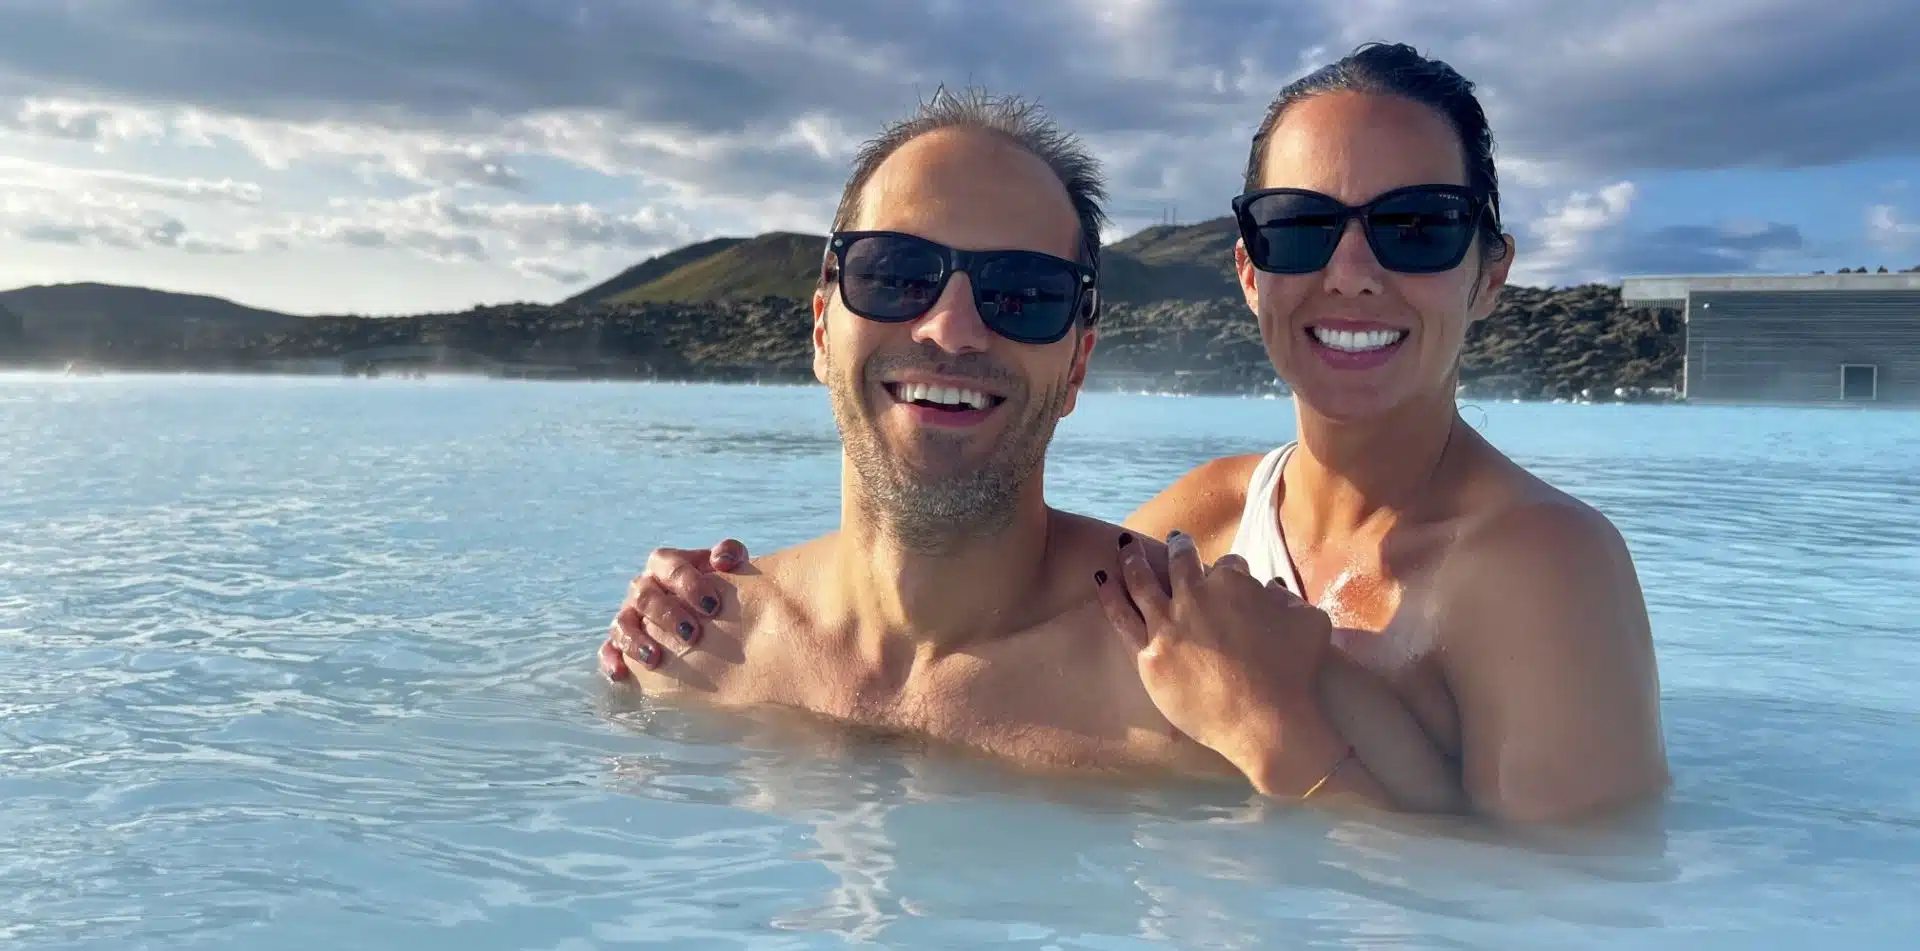 Enjoy soaking in Iceland's famed Blue Lagoon